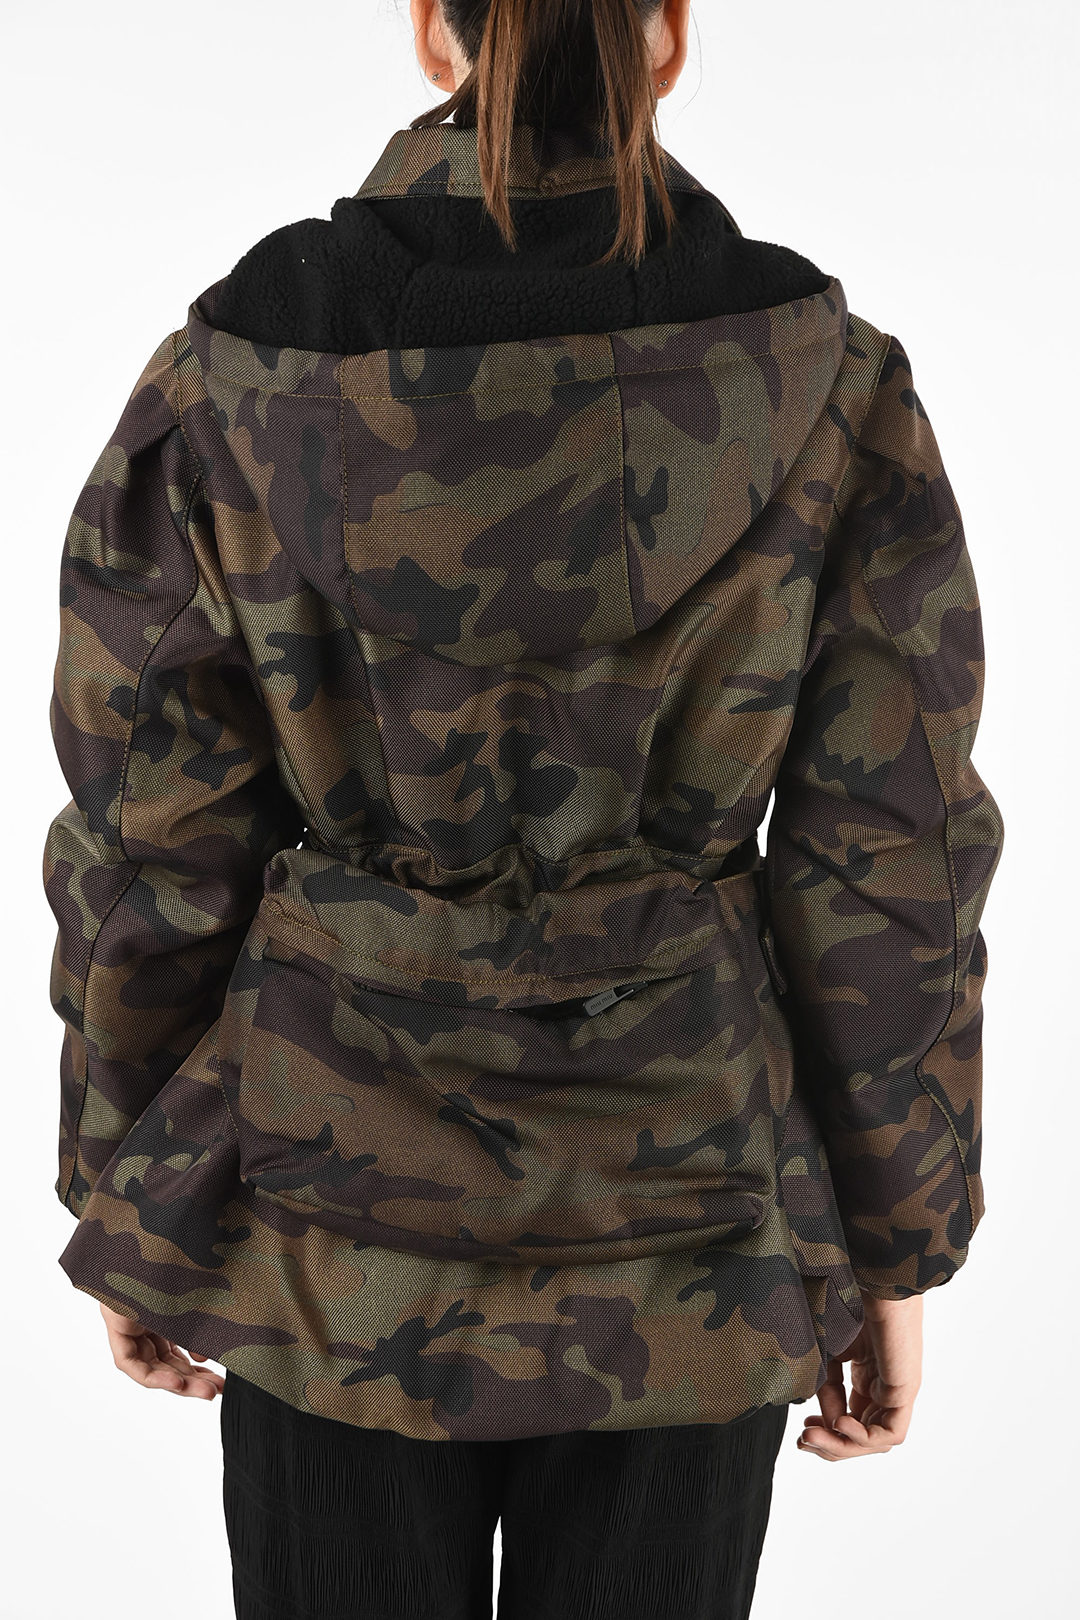 Miu Miu camouflage utility fatigue jacket women - Glamood Outlet